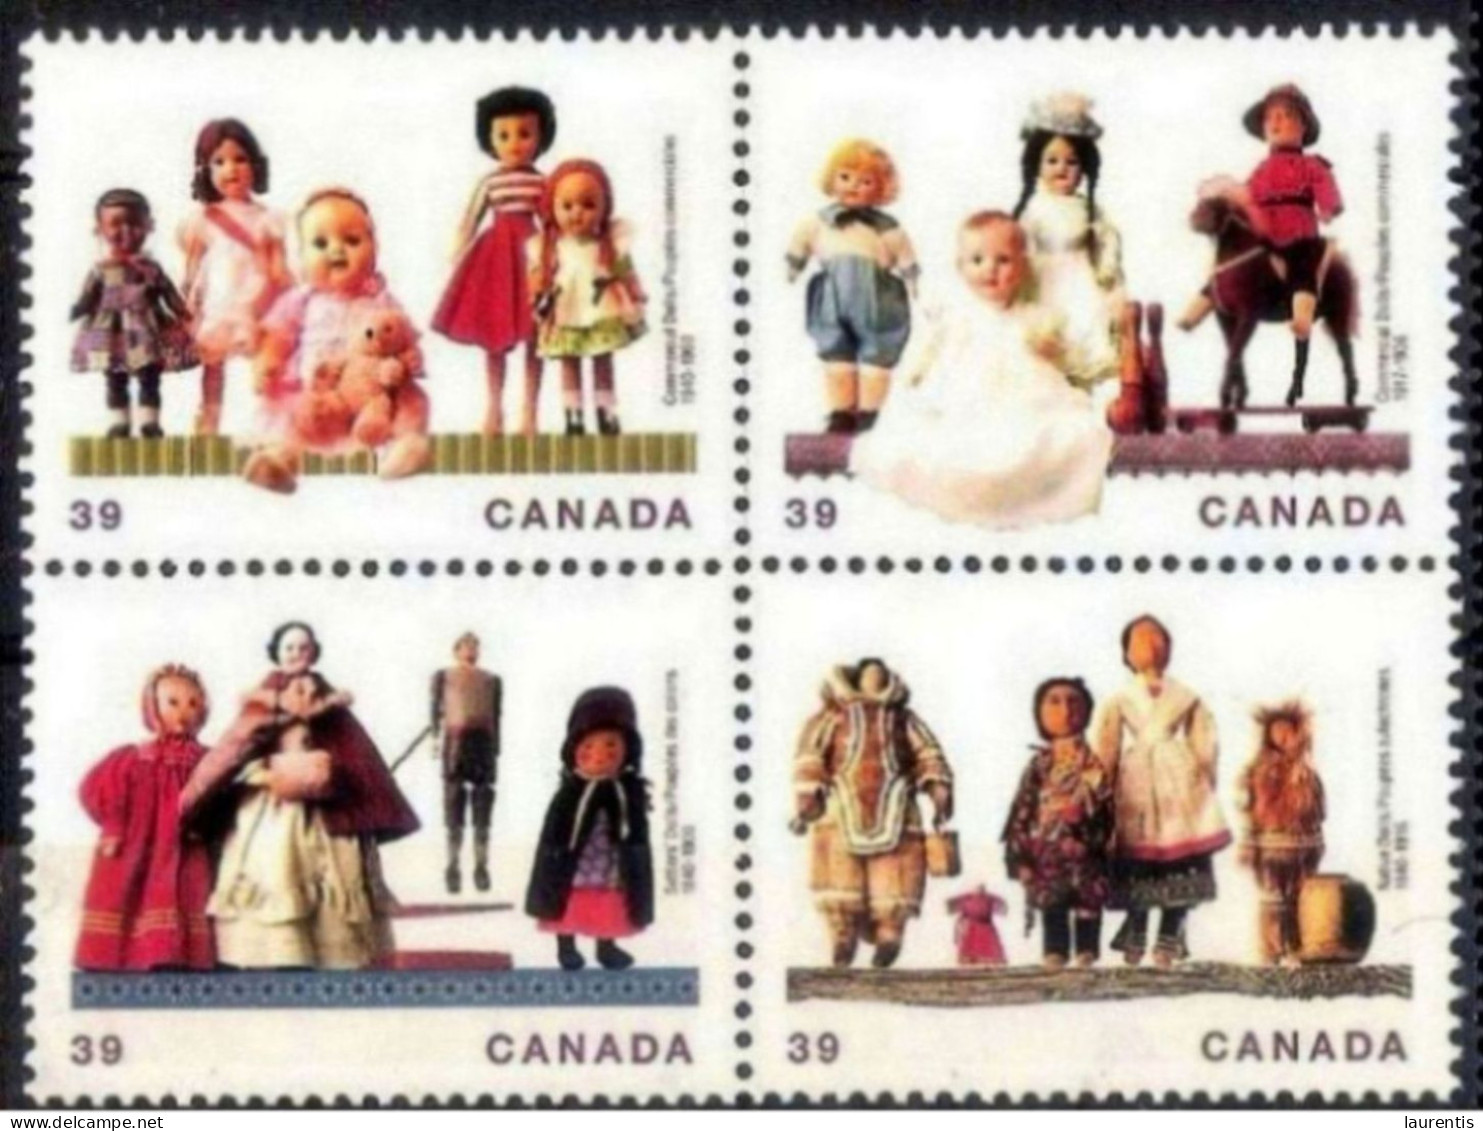 3186  Pouppées - Dolls - Canada - MNH - 1,65 . - Poppen